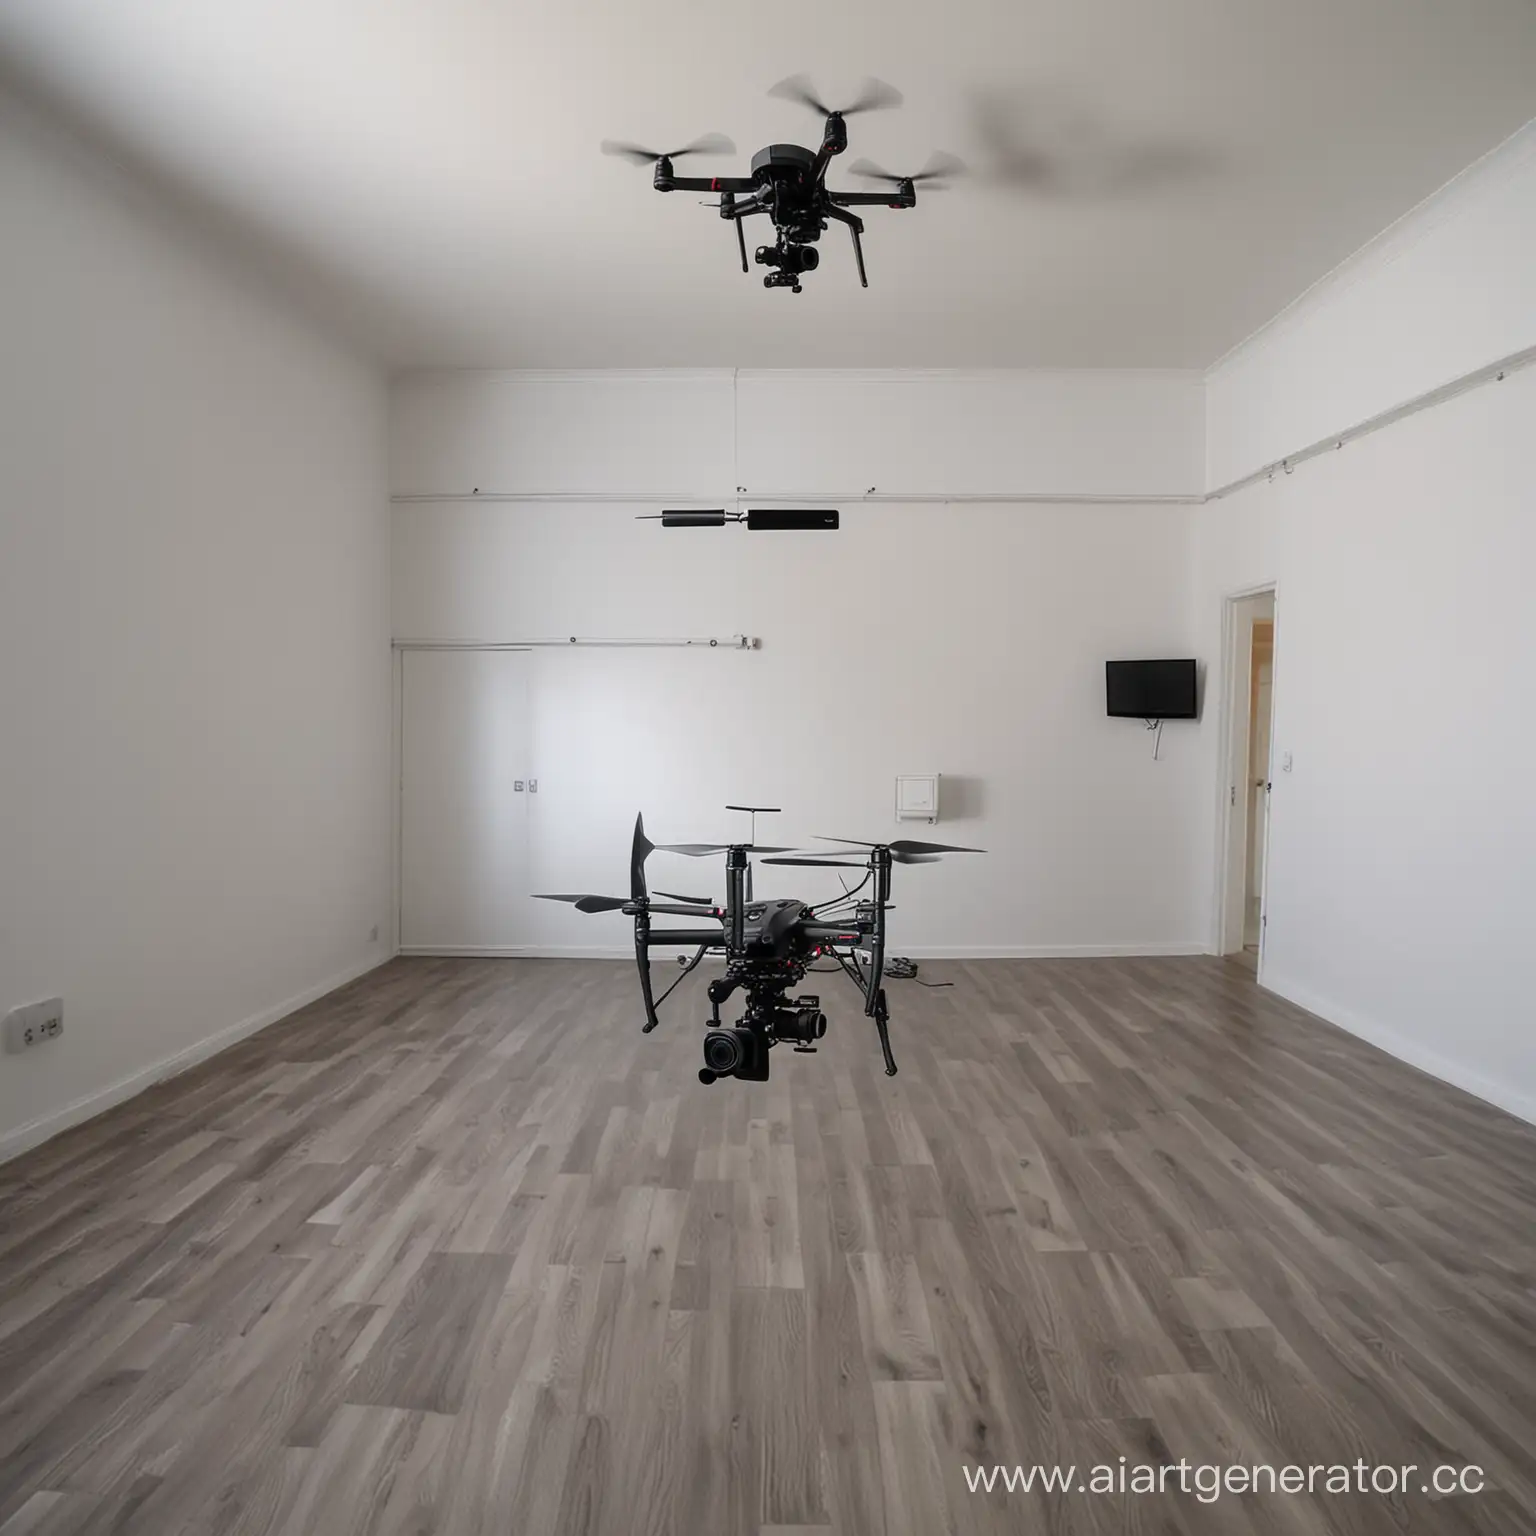 Drone-Flight-in-MultiPerspective-Room